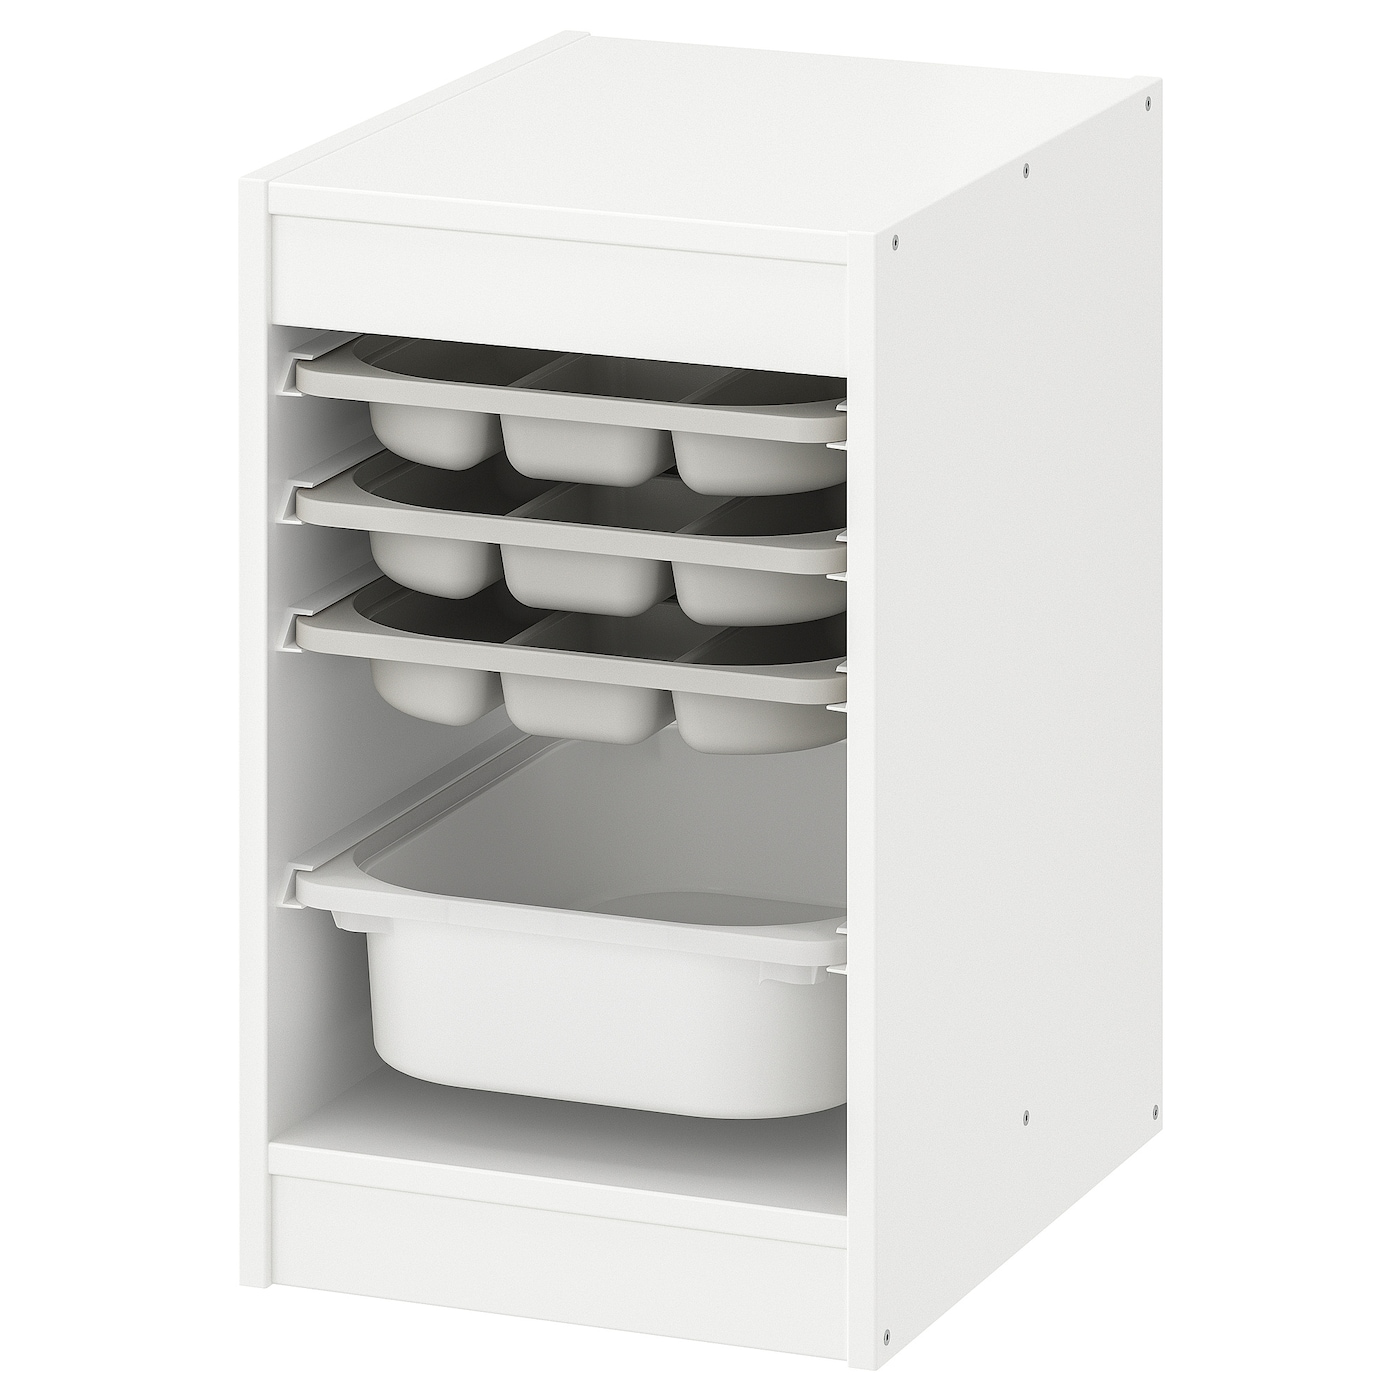 Стеллаж - IKEA TROFAST, 34х44х56 см, белый/бело-серый, ТРУФАСТ ИКЕА